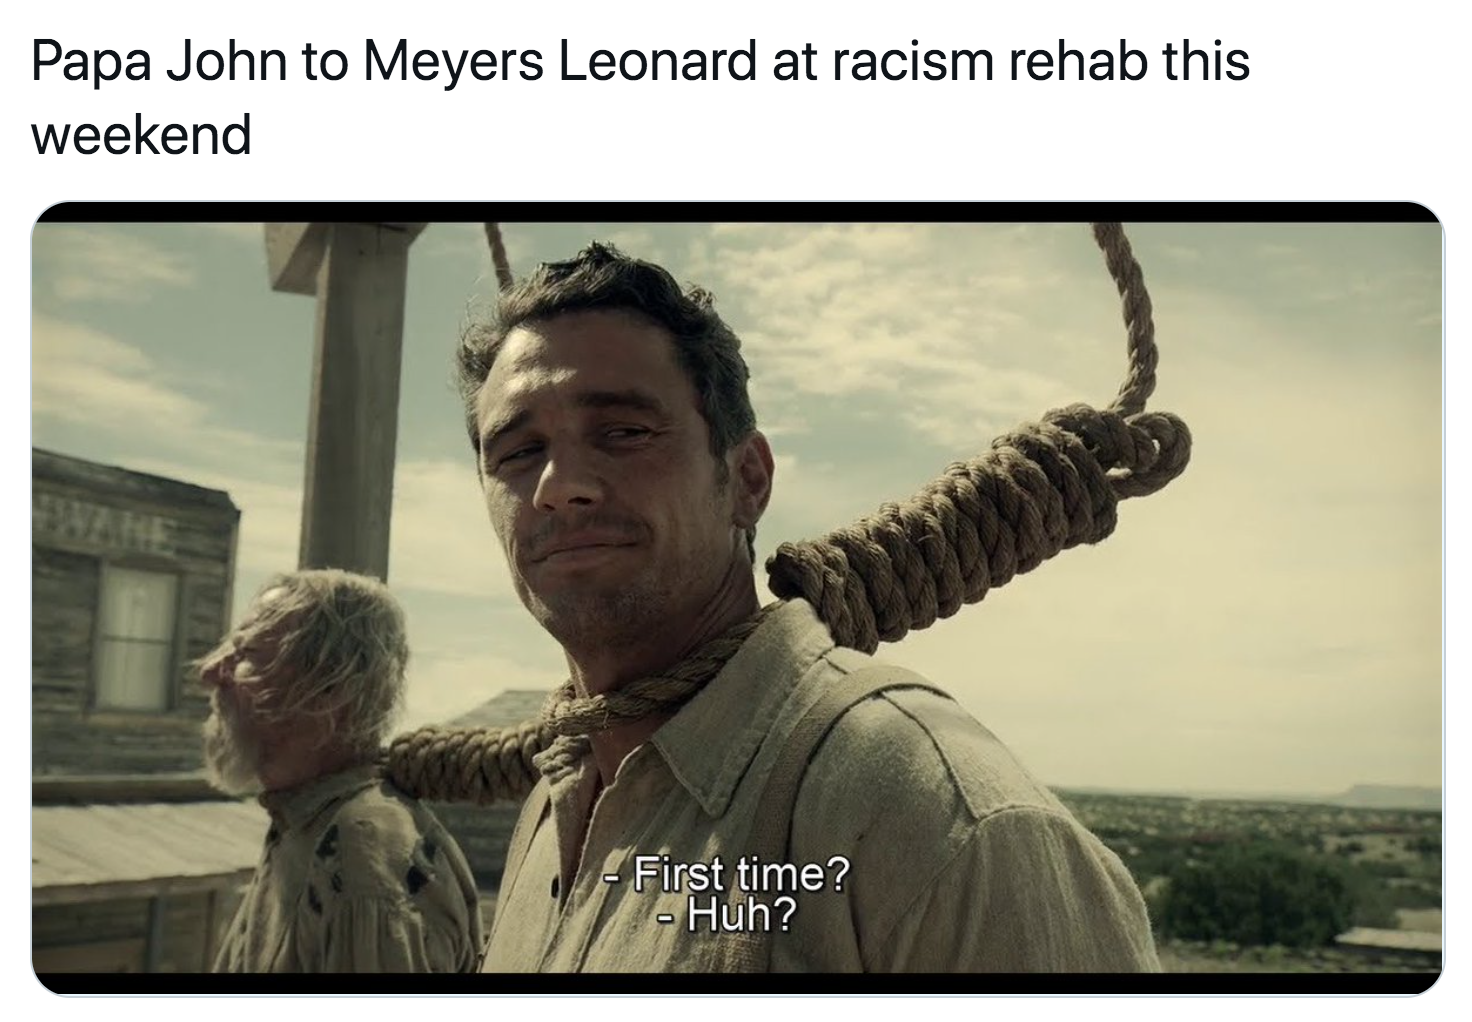 Meyers Leonard Anti-Semitic Slur - first time meme template - Papa John to Meyers Leonard at racism rehab this weekend First time? Huh?